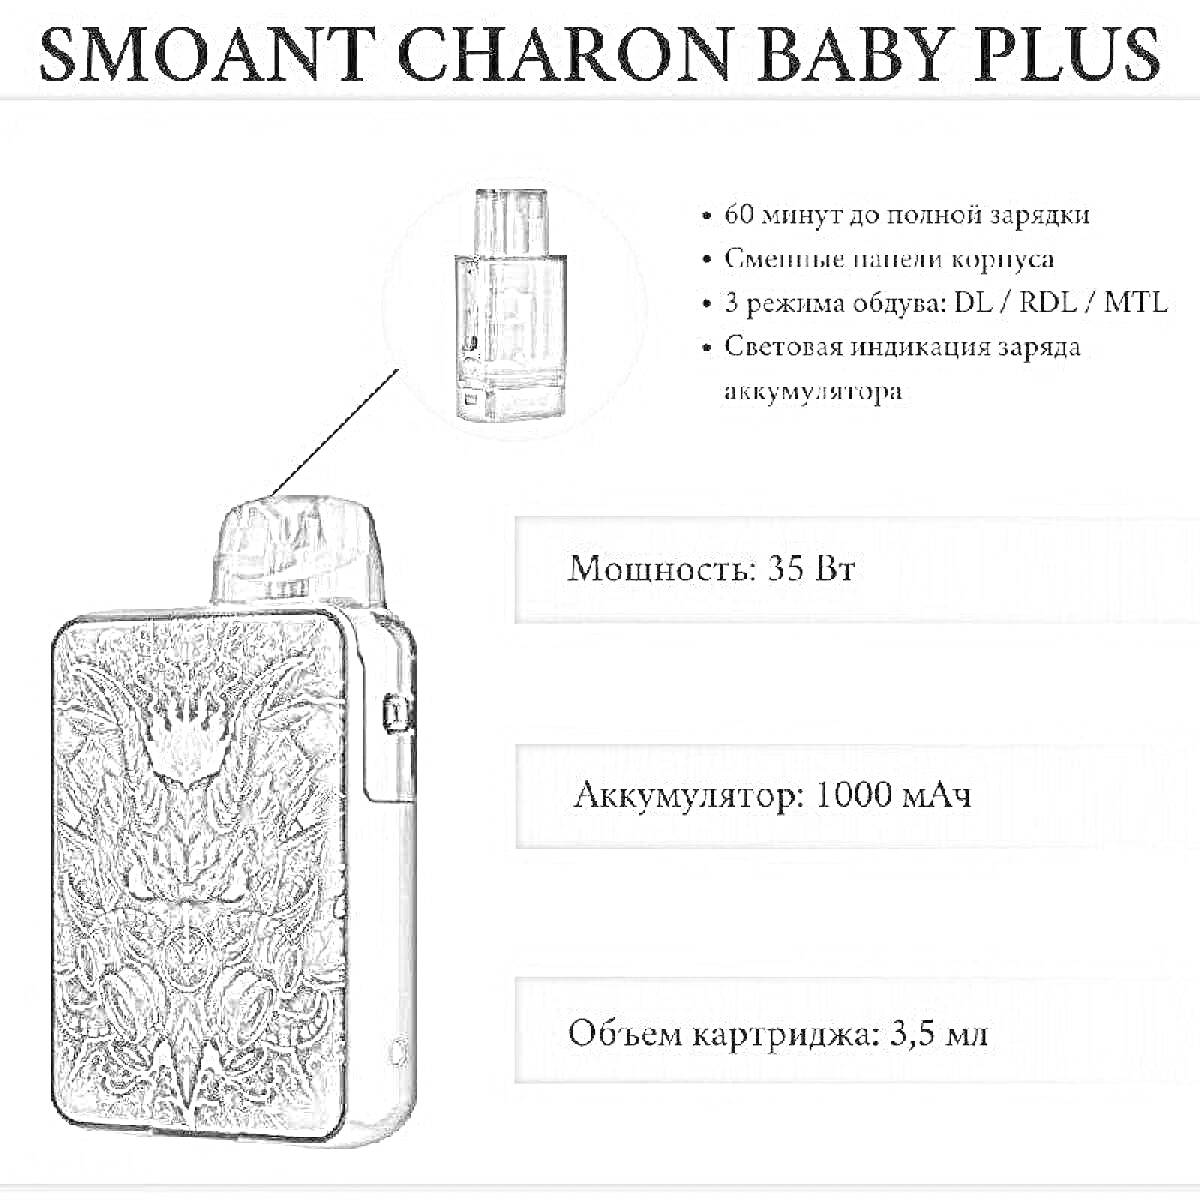 Раскраска Smoant Charon Baby Plus, изображение устройства с мощностью 35 Вт, аккумулятор 1000 мАч, объем картриджа 3.5 мл, три режима обдува (DL/RDL/MTL), смесьная заправка картриджа, световая индикация заряда аккумулятора